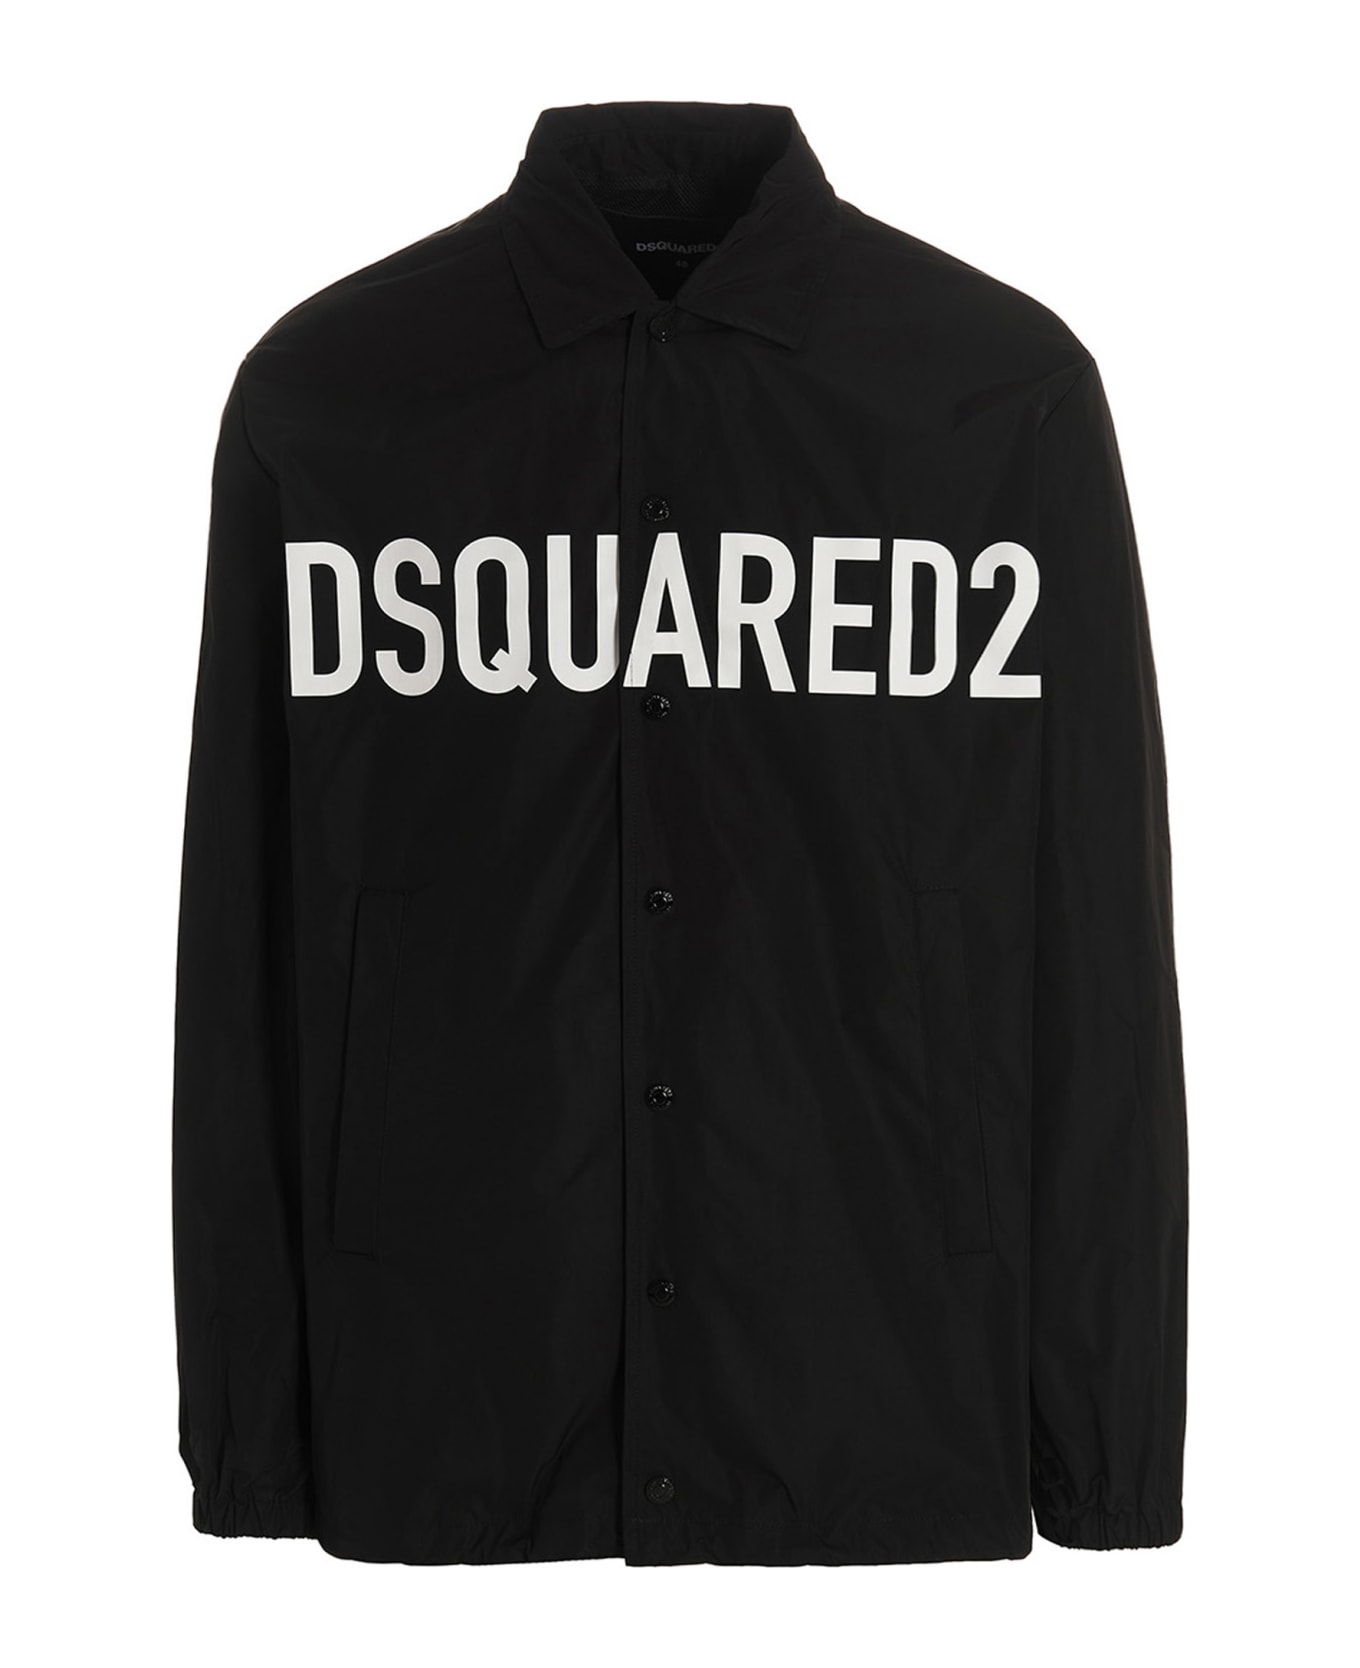 Dsquared2 'dsquared2' Overshirt - Black   シャツ